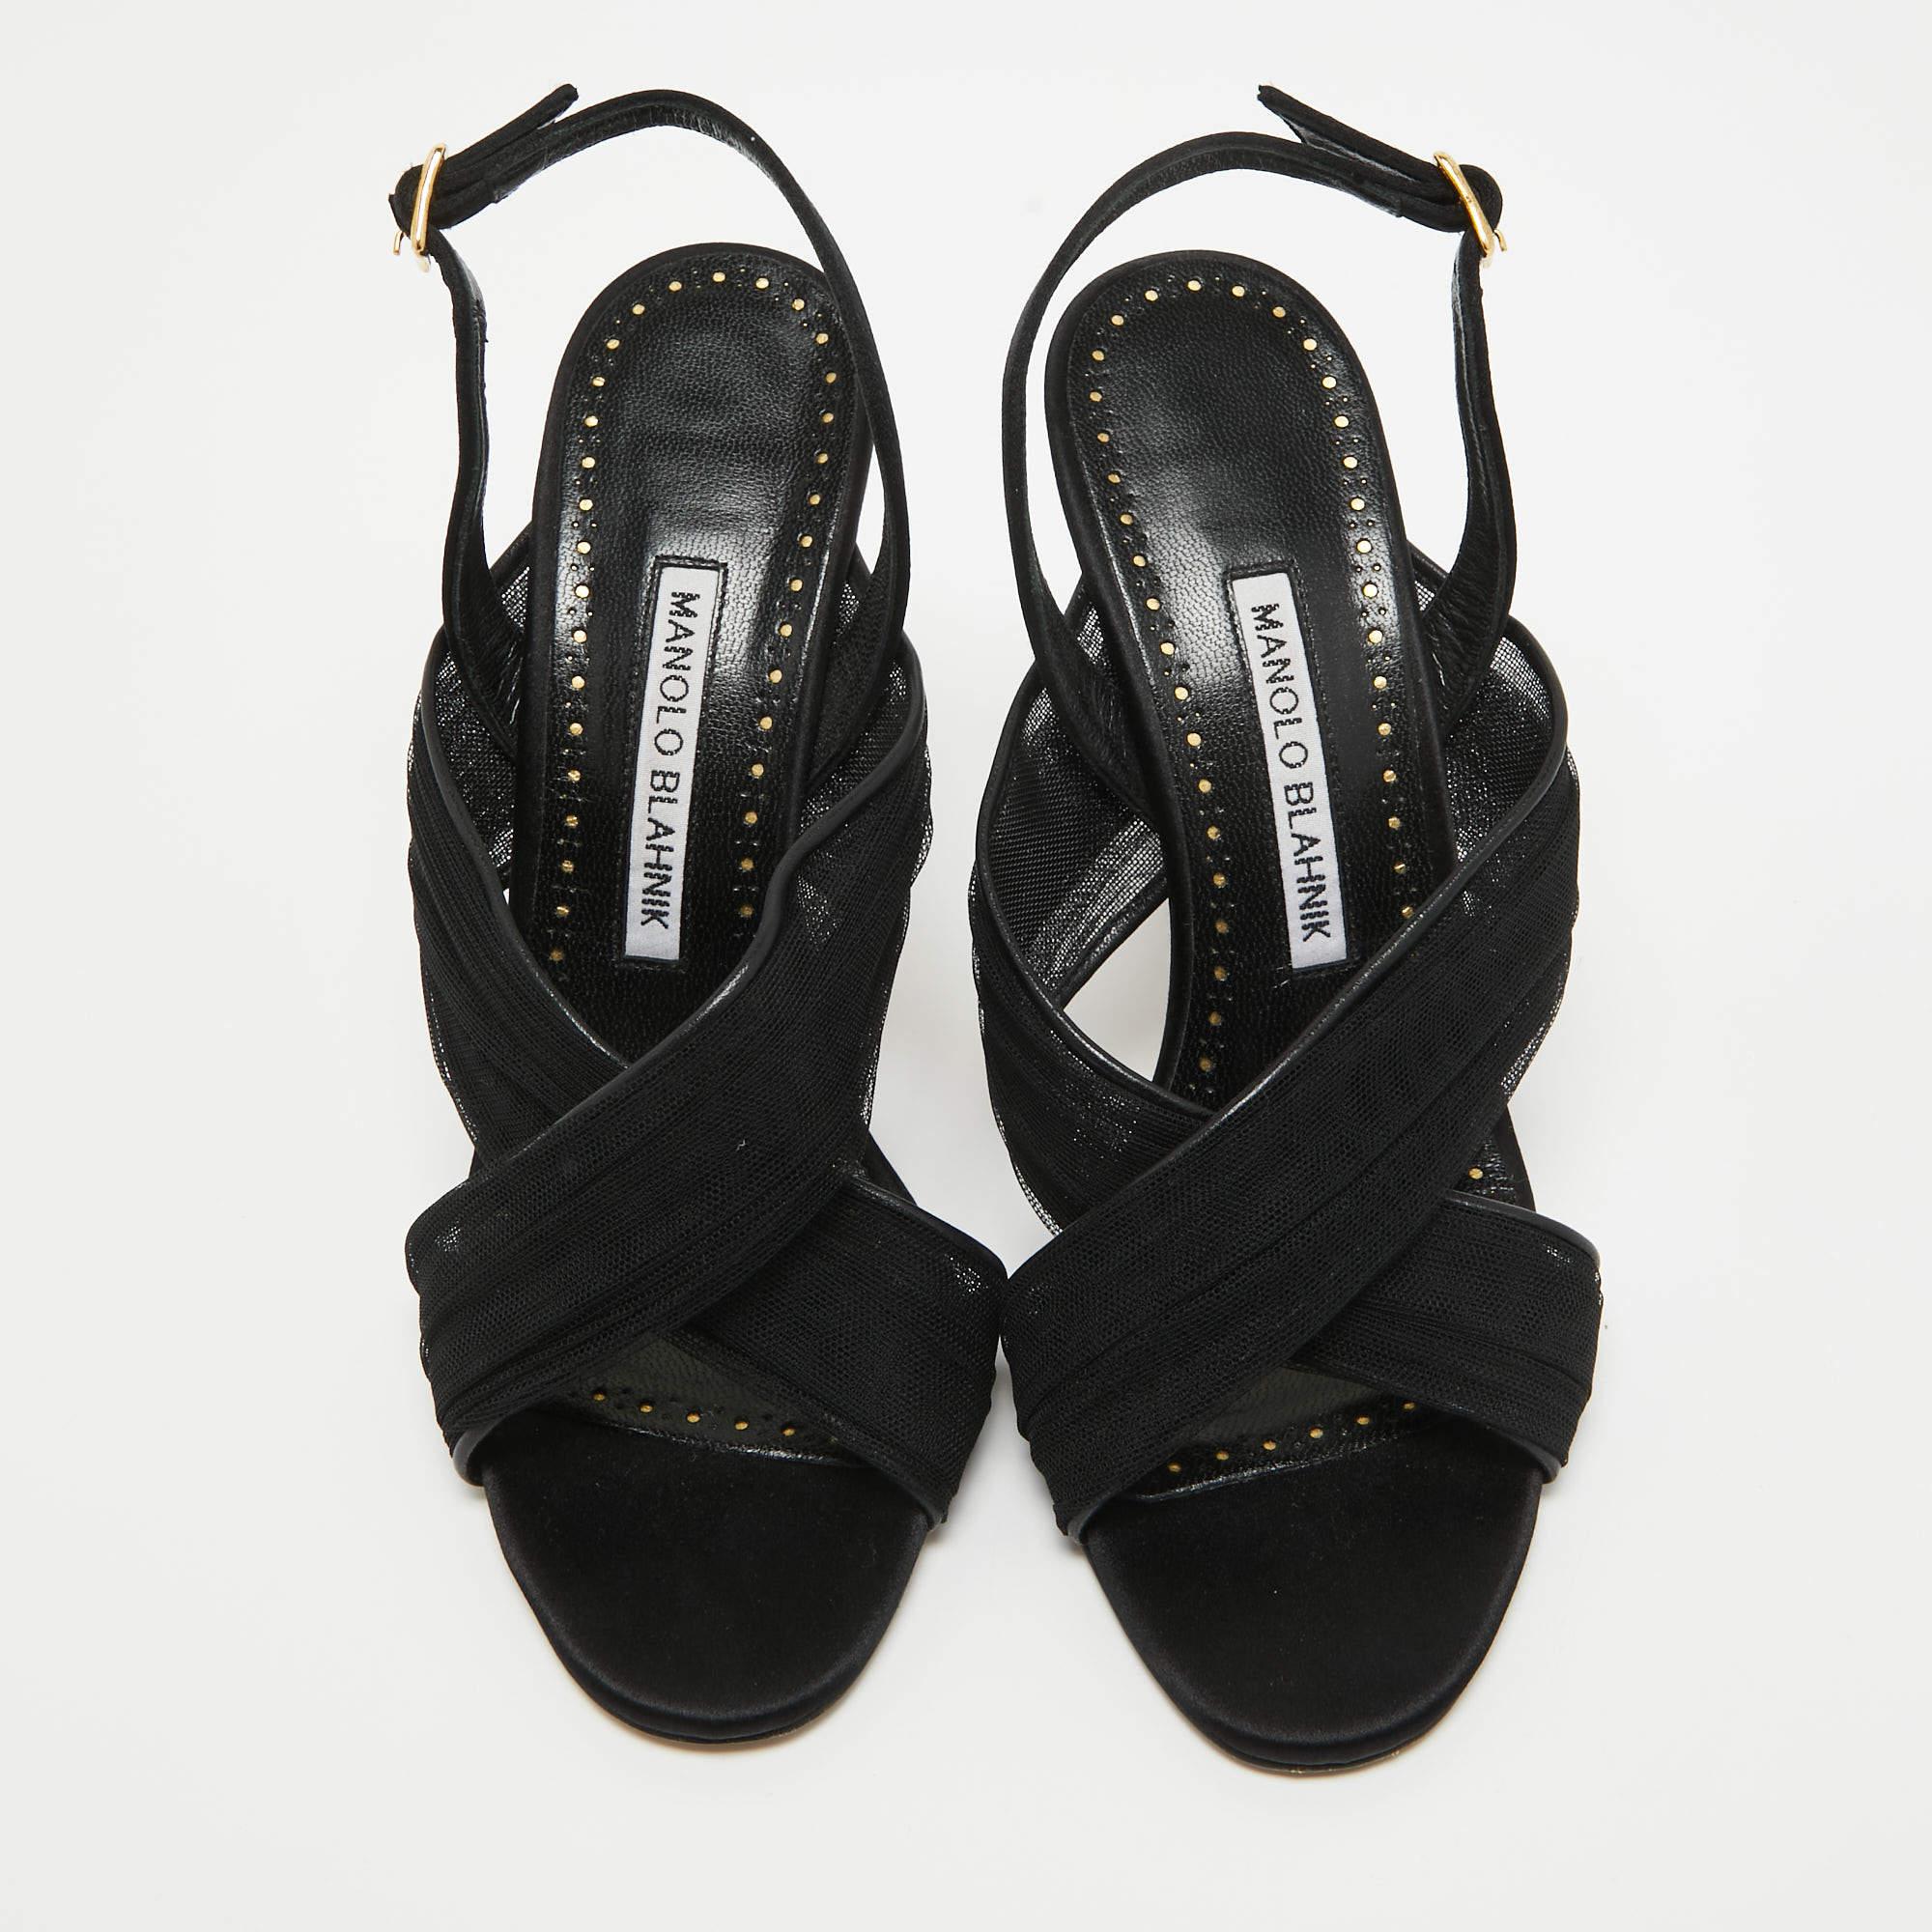 Manolo Blahnik Black Mesh and Leather Slingback Sandals Size 37 In Good Condition For Sale In Dubai, Al Qouz 2